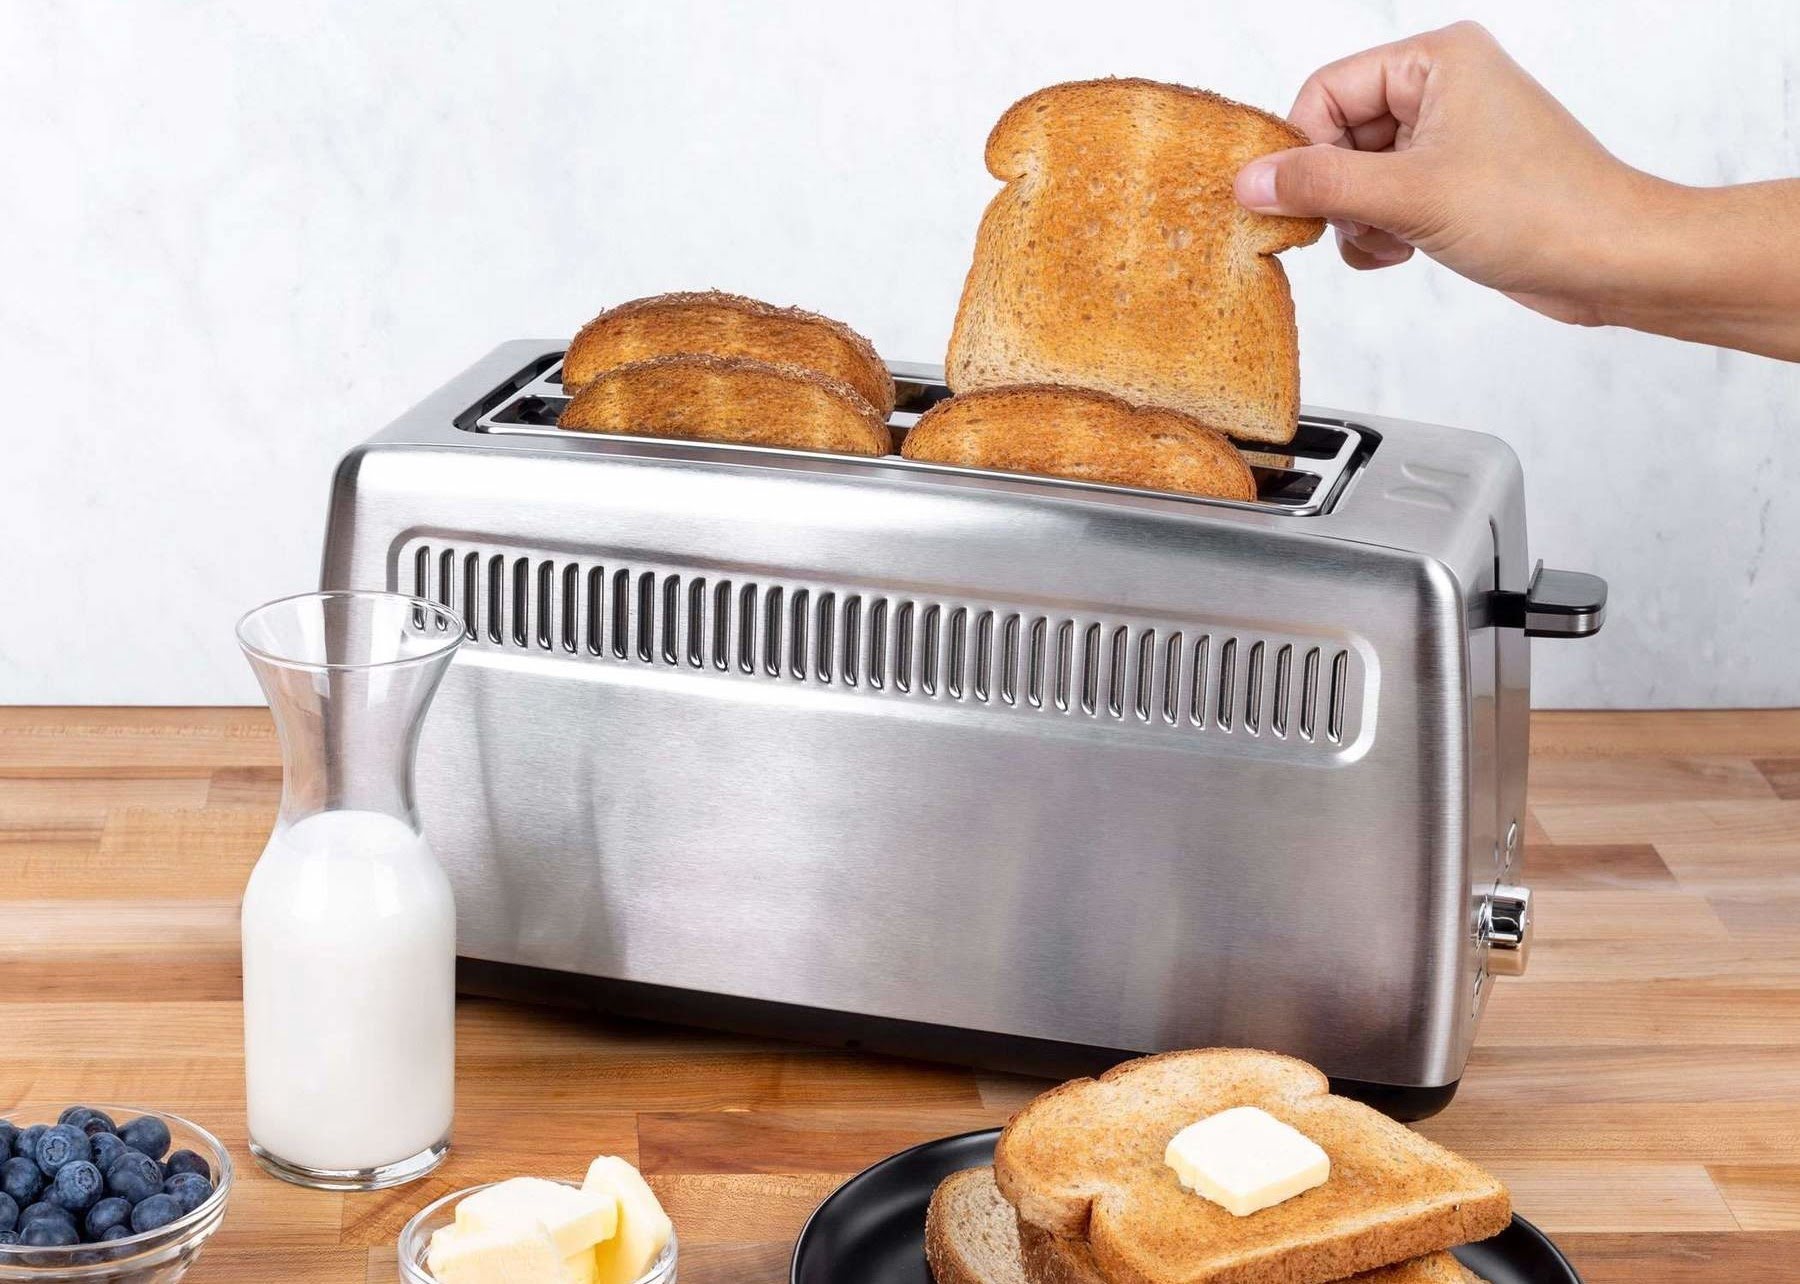 Kenmore Elite 4-Slice Long Slot Toaster 